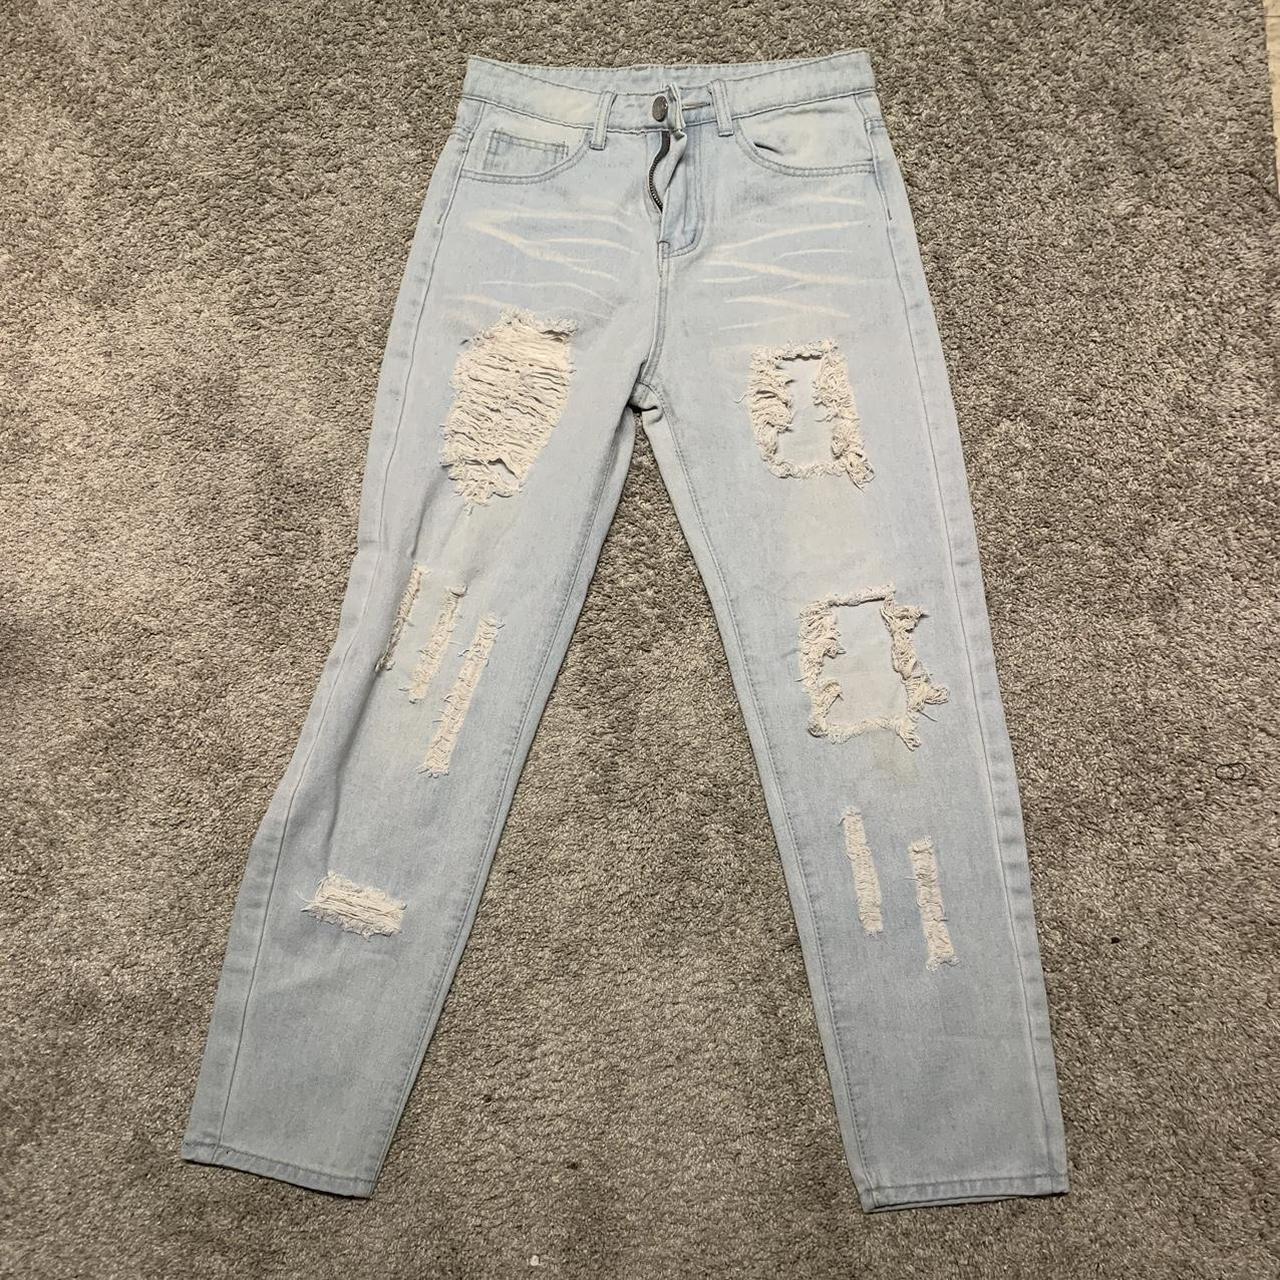 Light Wash Jeans 🤍 - never worn - small - Depop